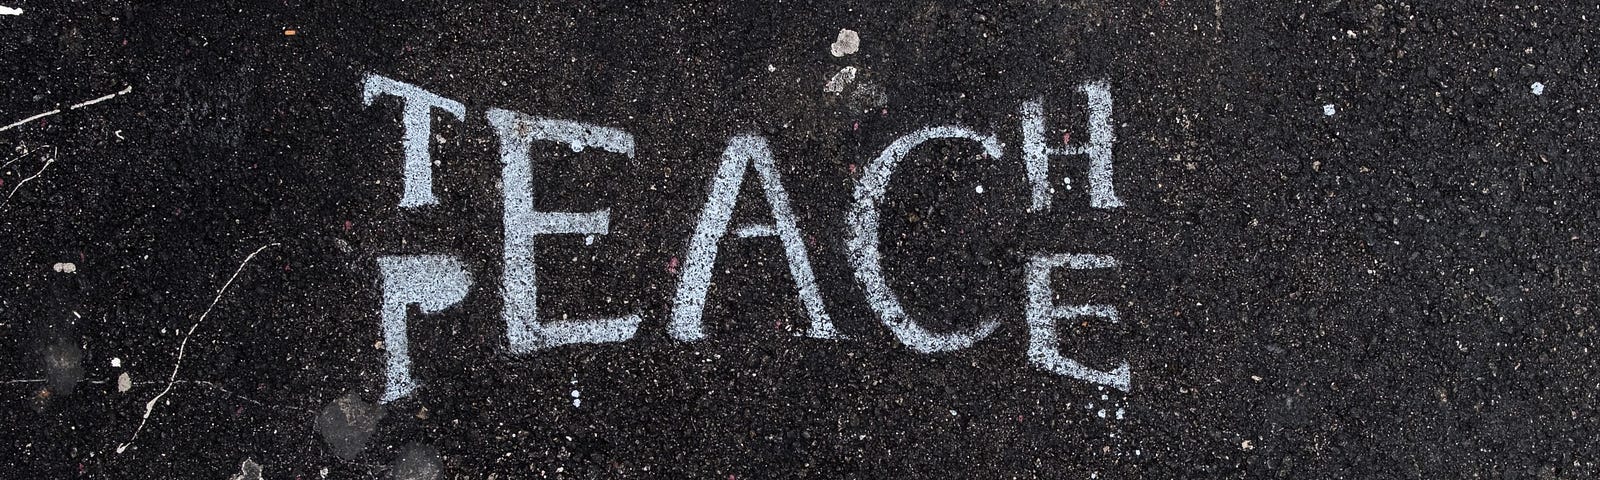 The words “Teach Peace” painted onto the asphalt in Los Angeles, CA